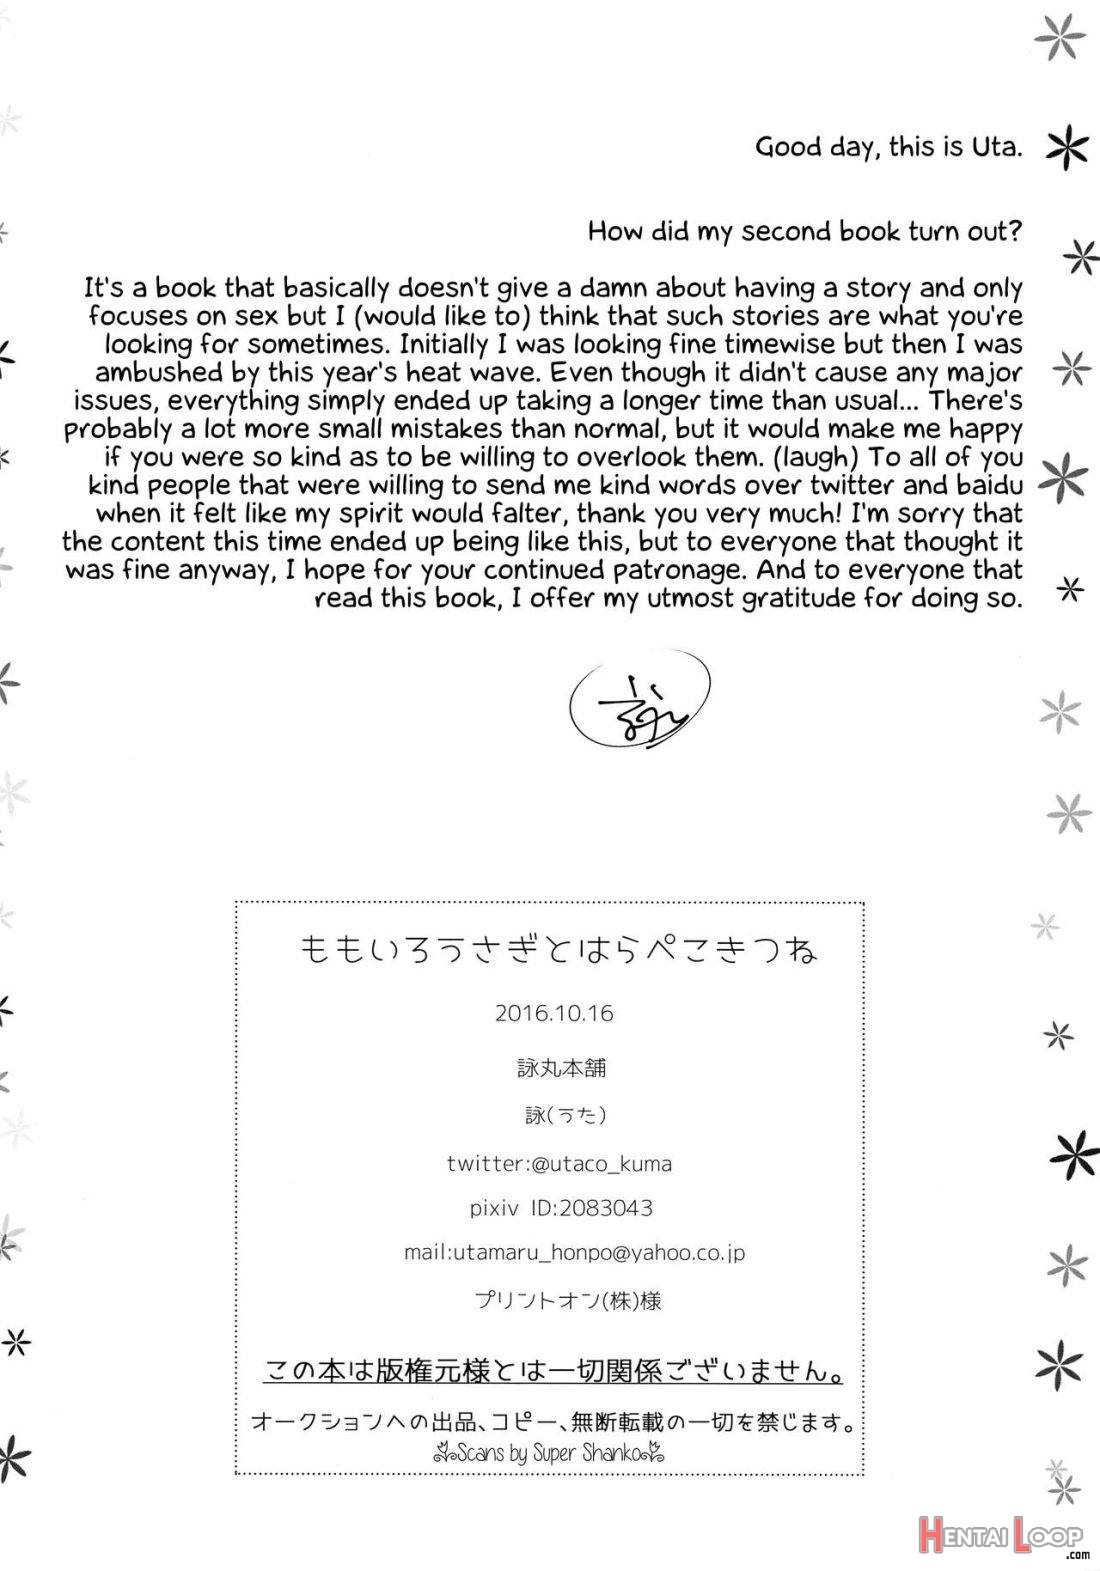 Momoiro Usagi to Hara Peko Kitsune page 28